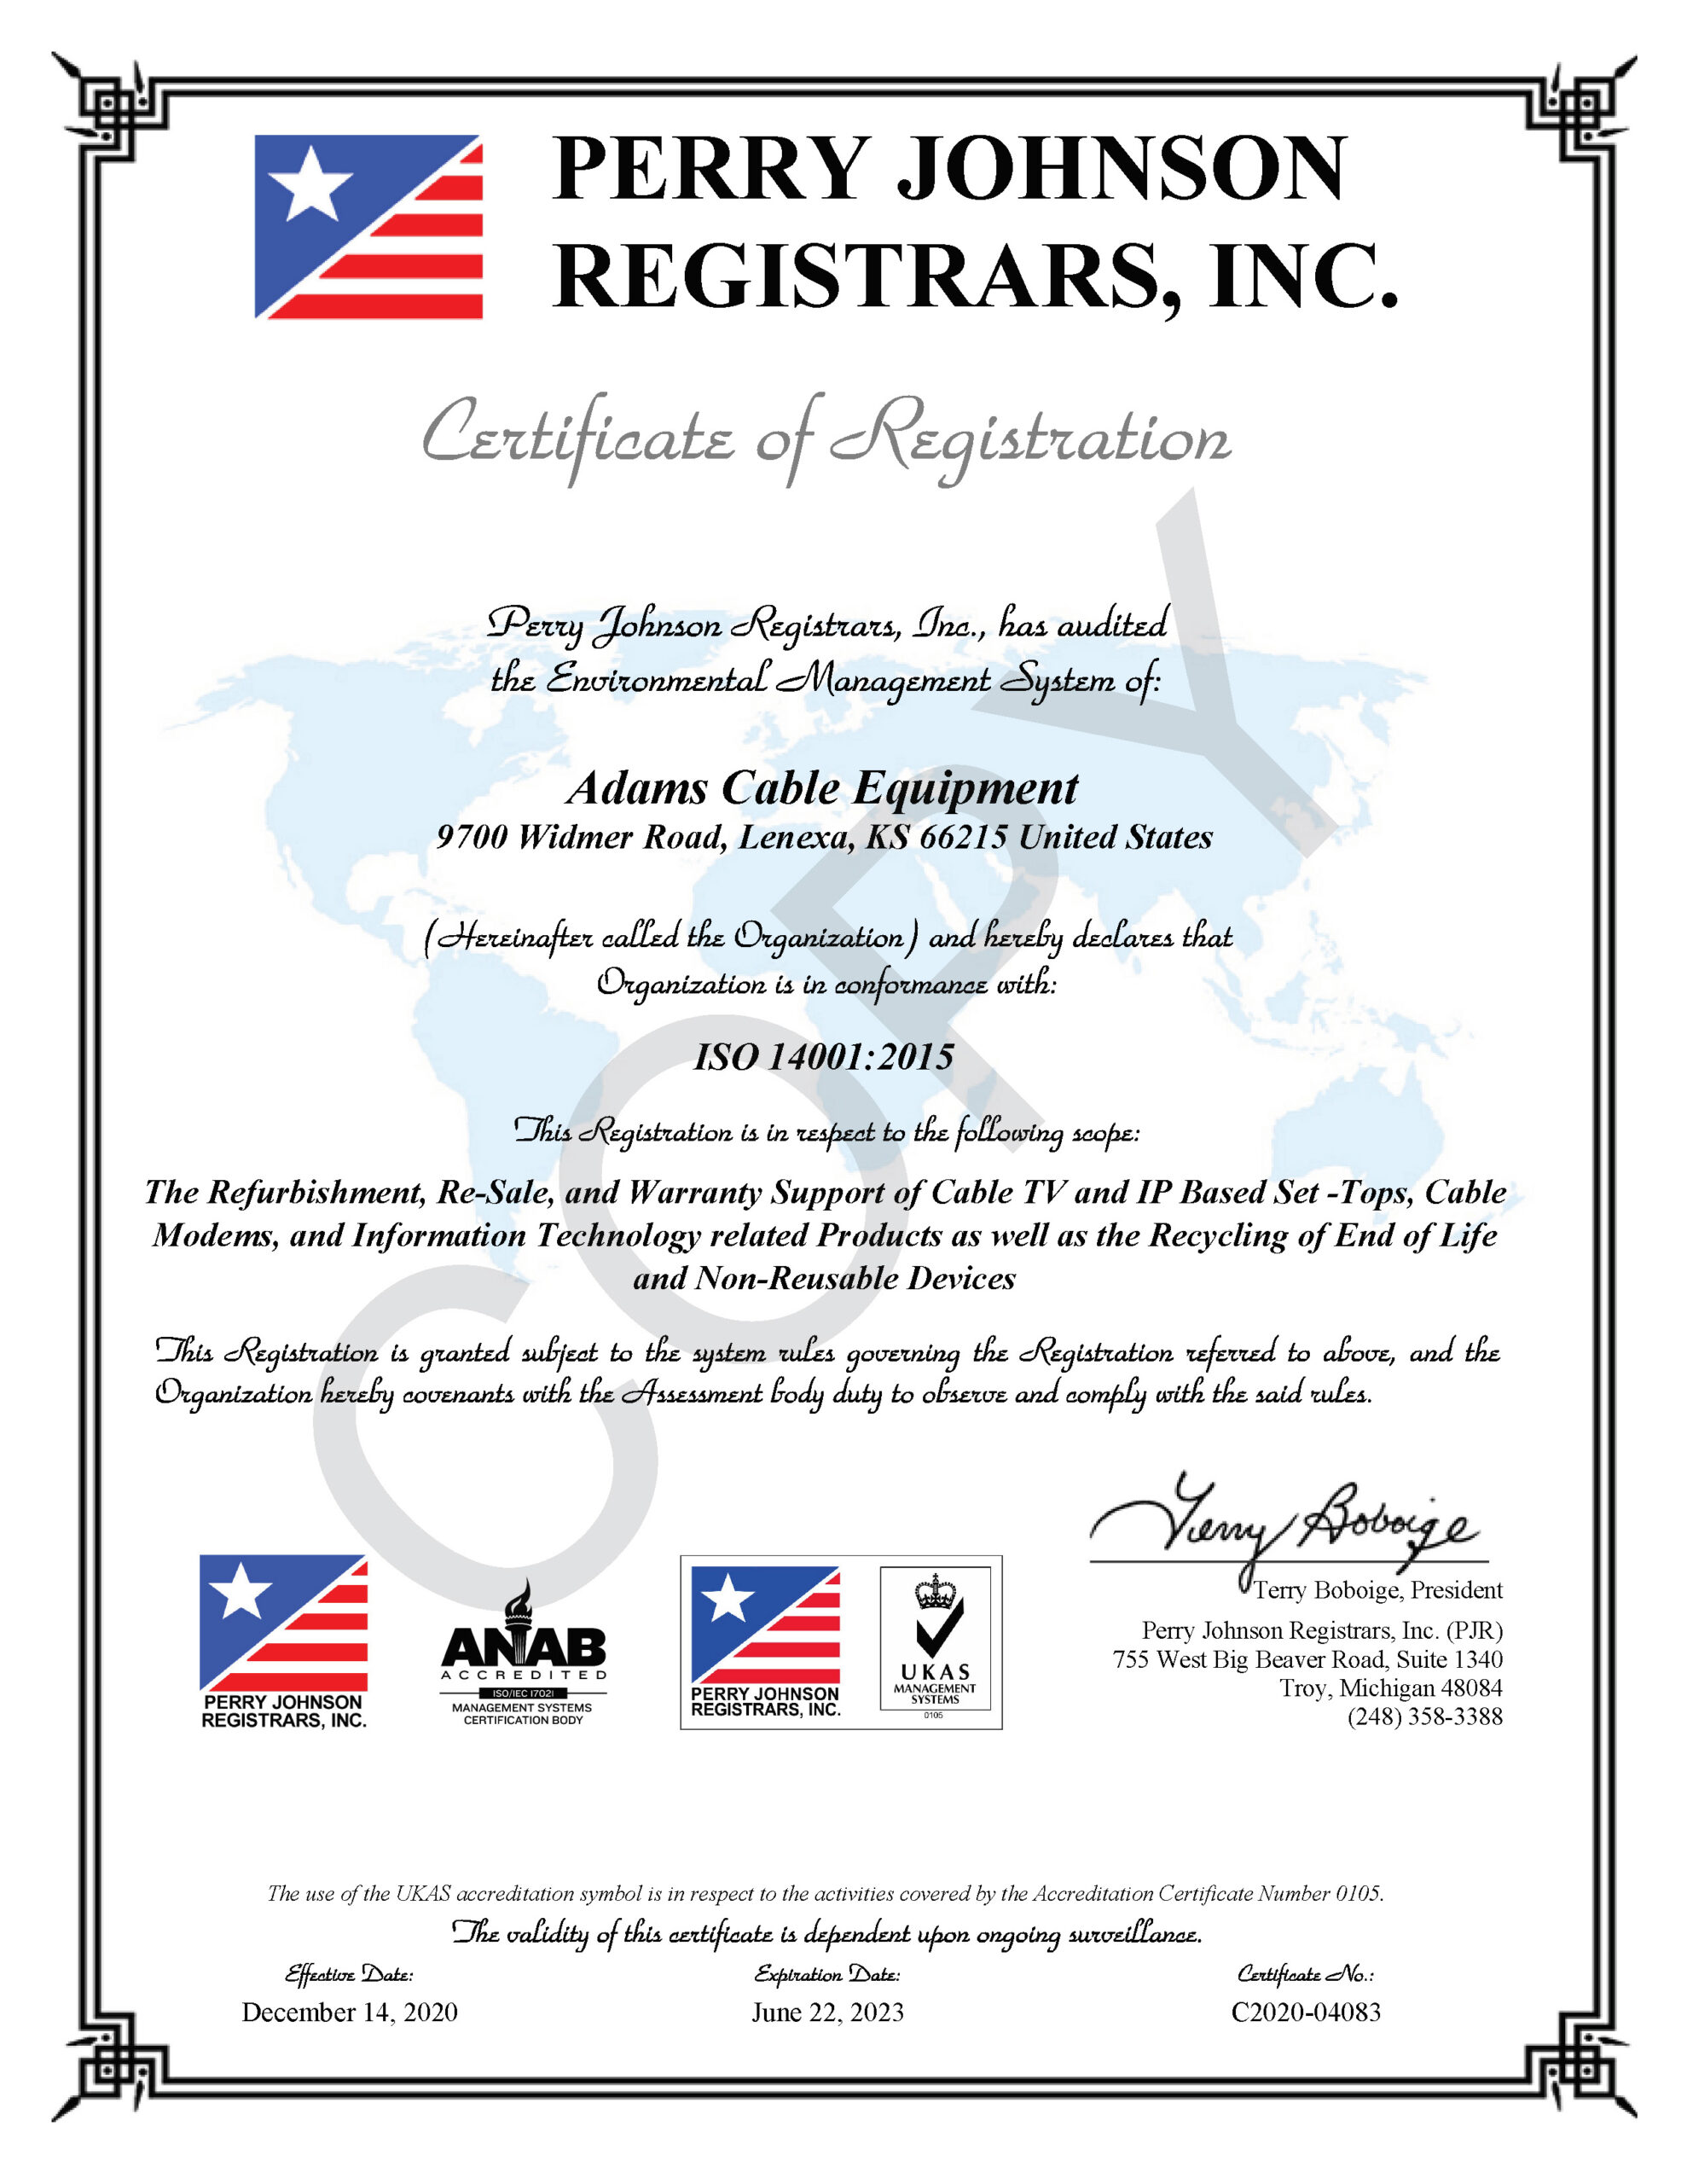 Adams Cable Equipment 14001 Certificate